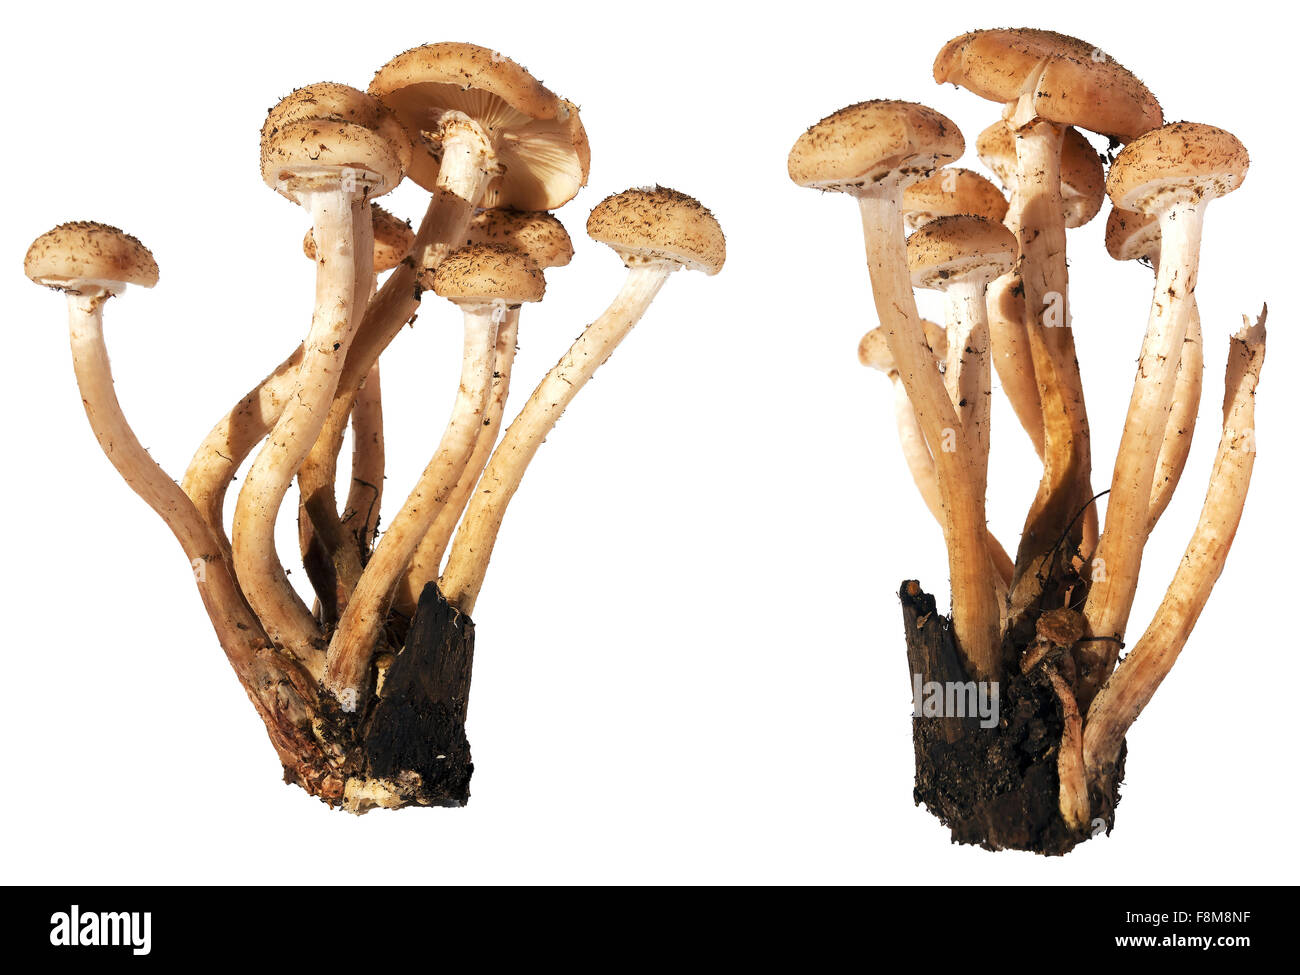 Armillaria mellea honey fungus mushrooms isolated on white background Stock Photo